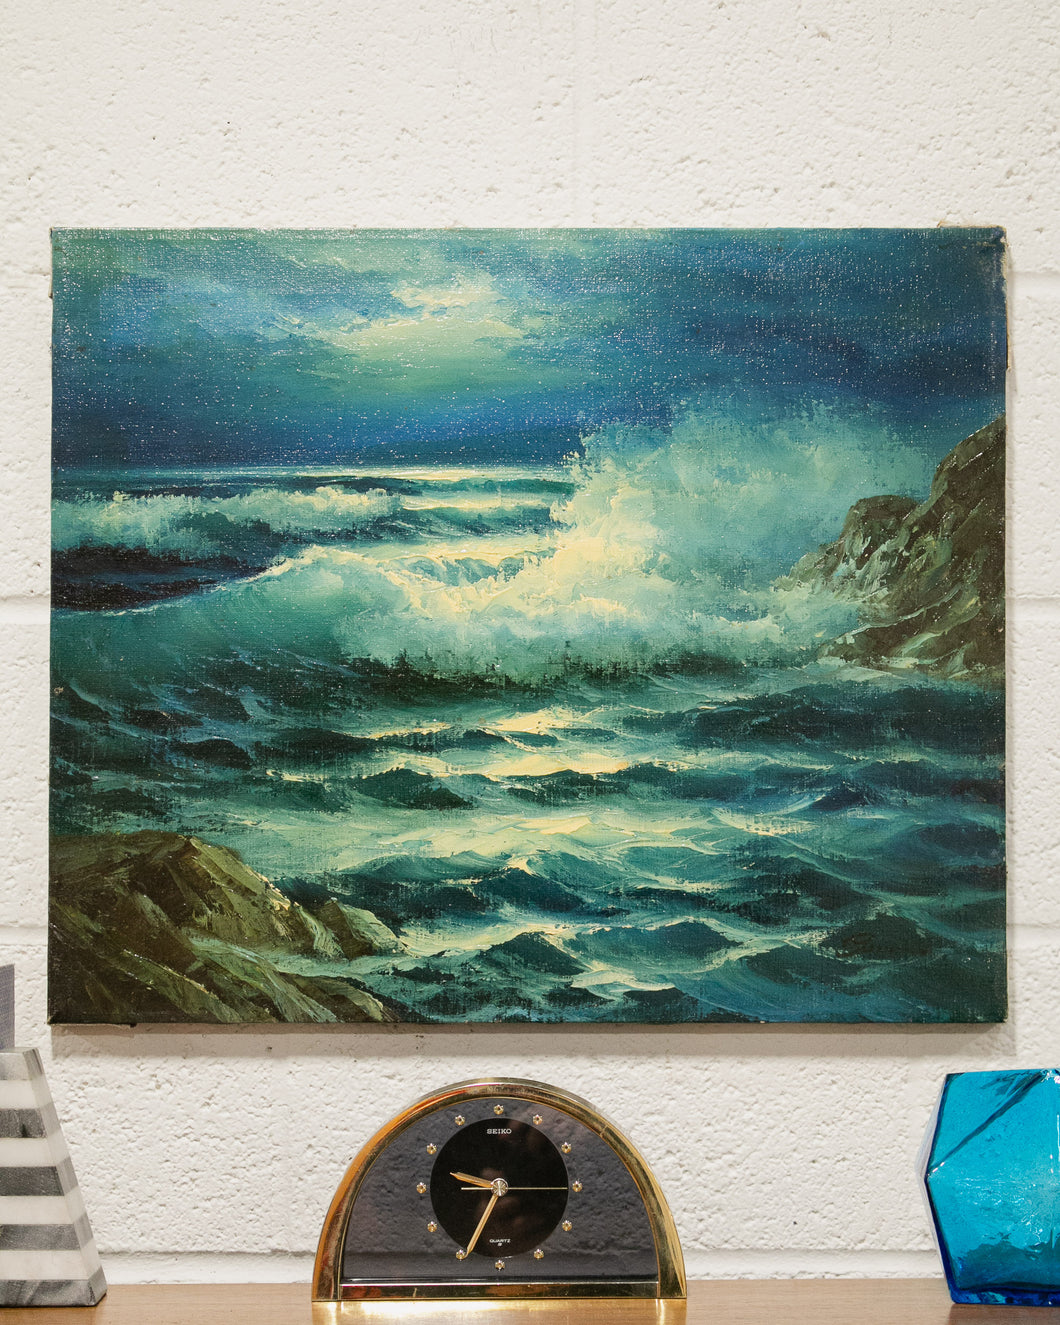 Crashing Waves Hawaii Oil Painting